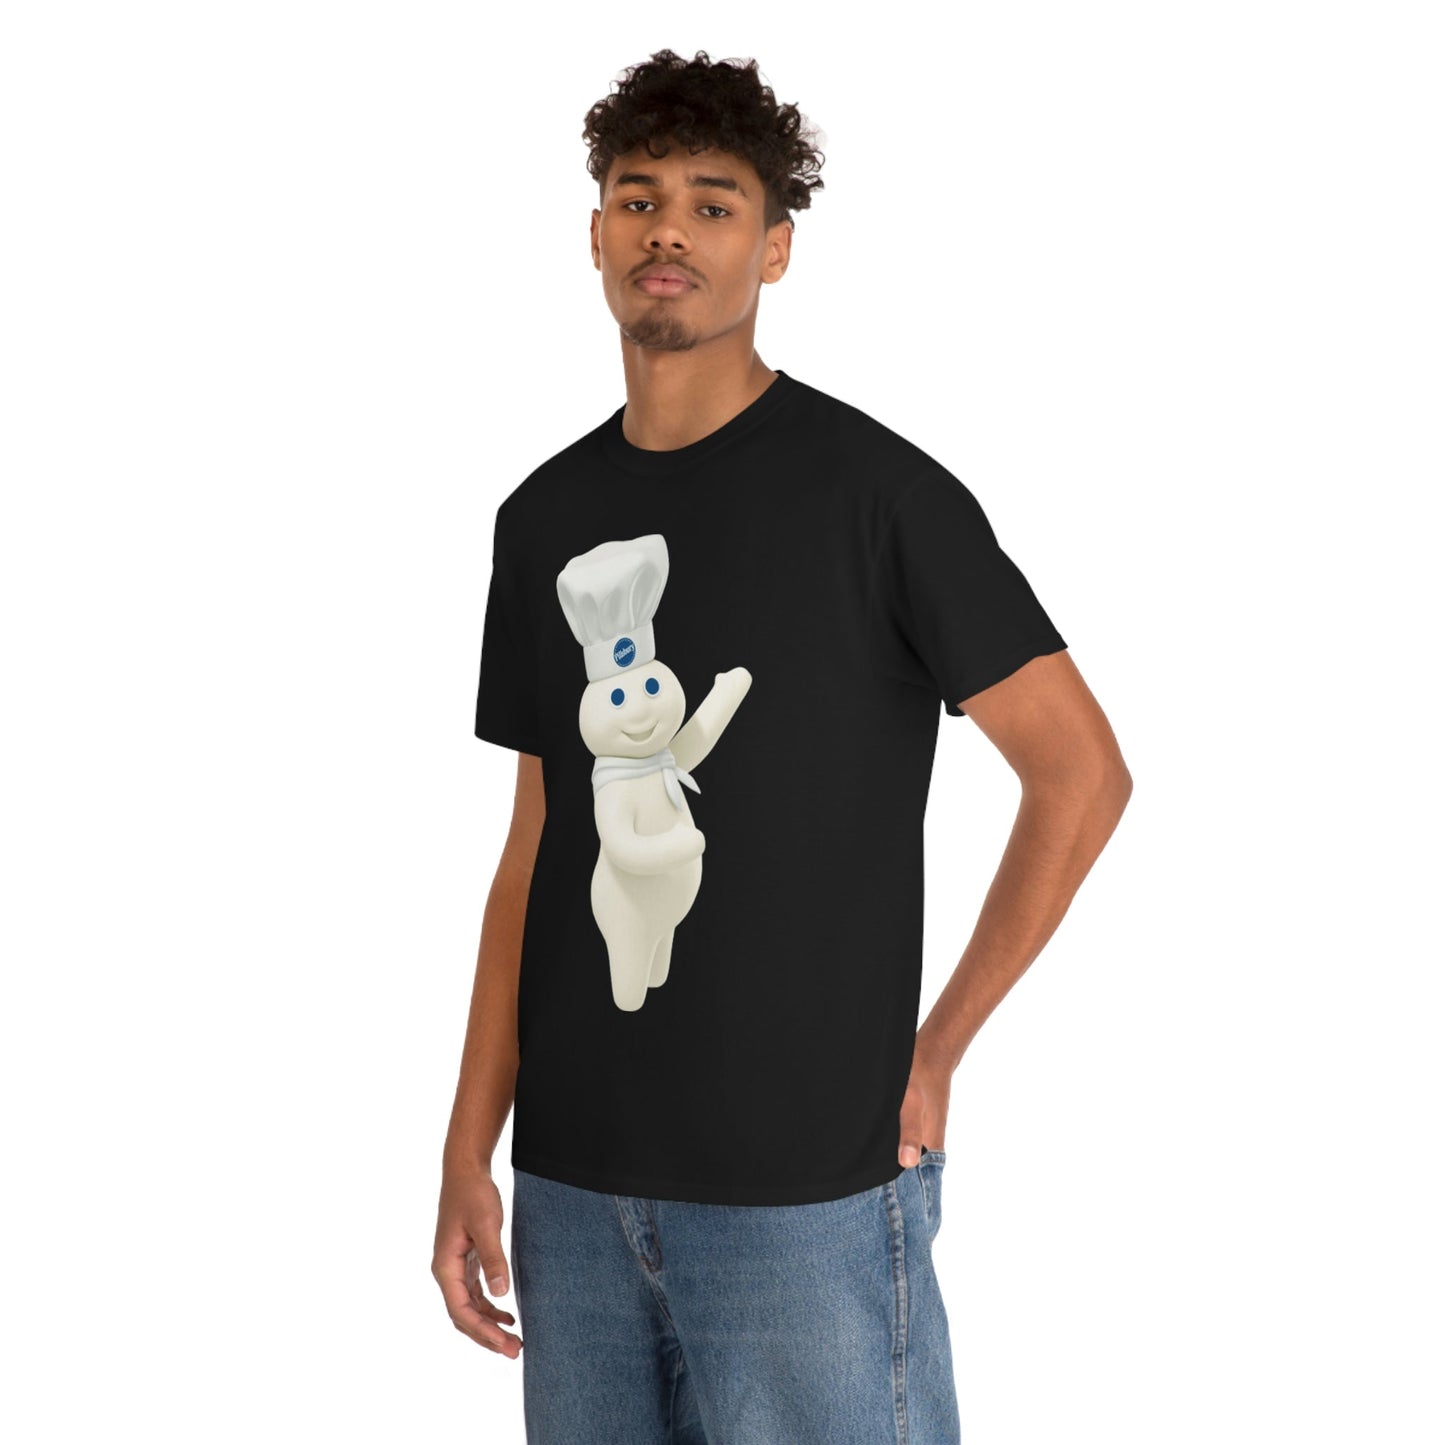 Pillsbury Doughboy T-Shirt - RetroTeeShop